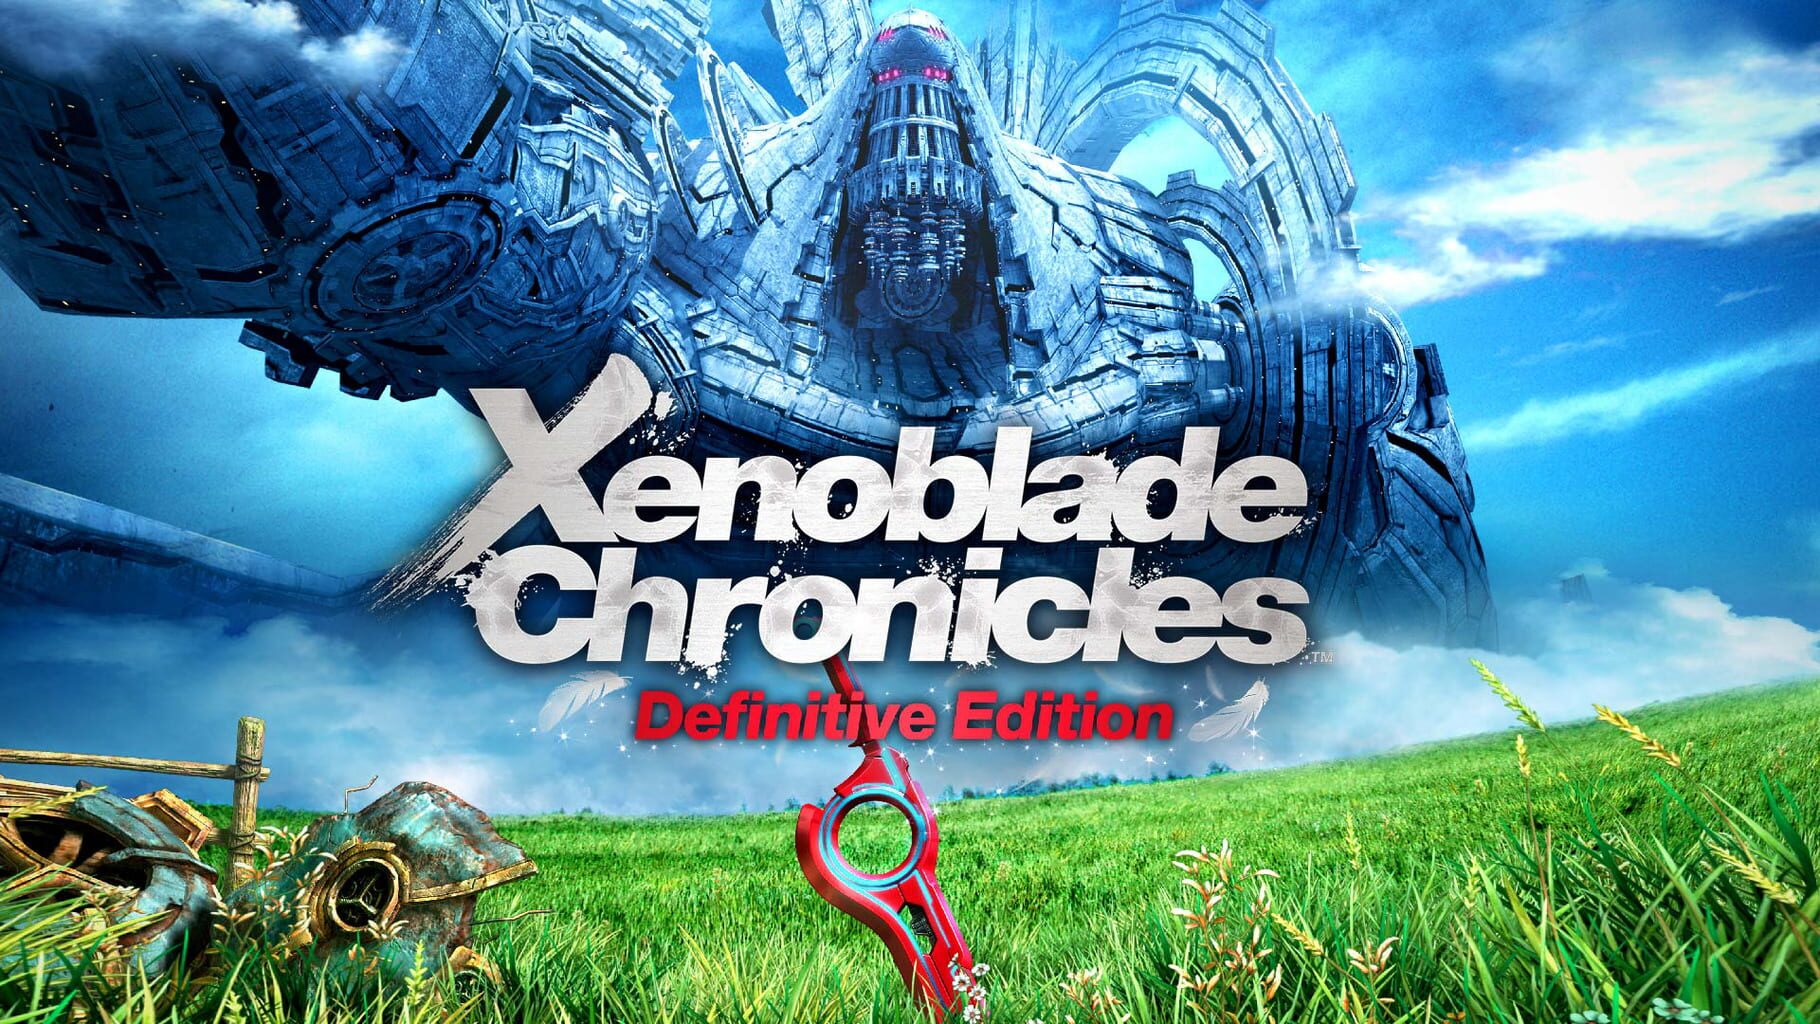 Artwork for Xenoblade Chronicles: Definitive Edition